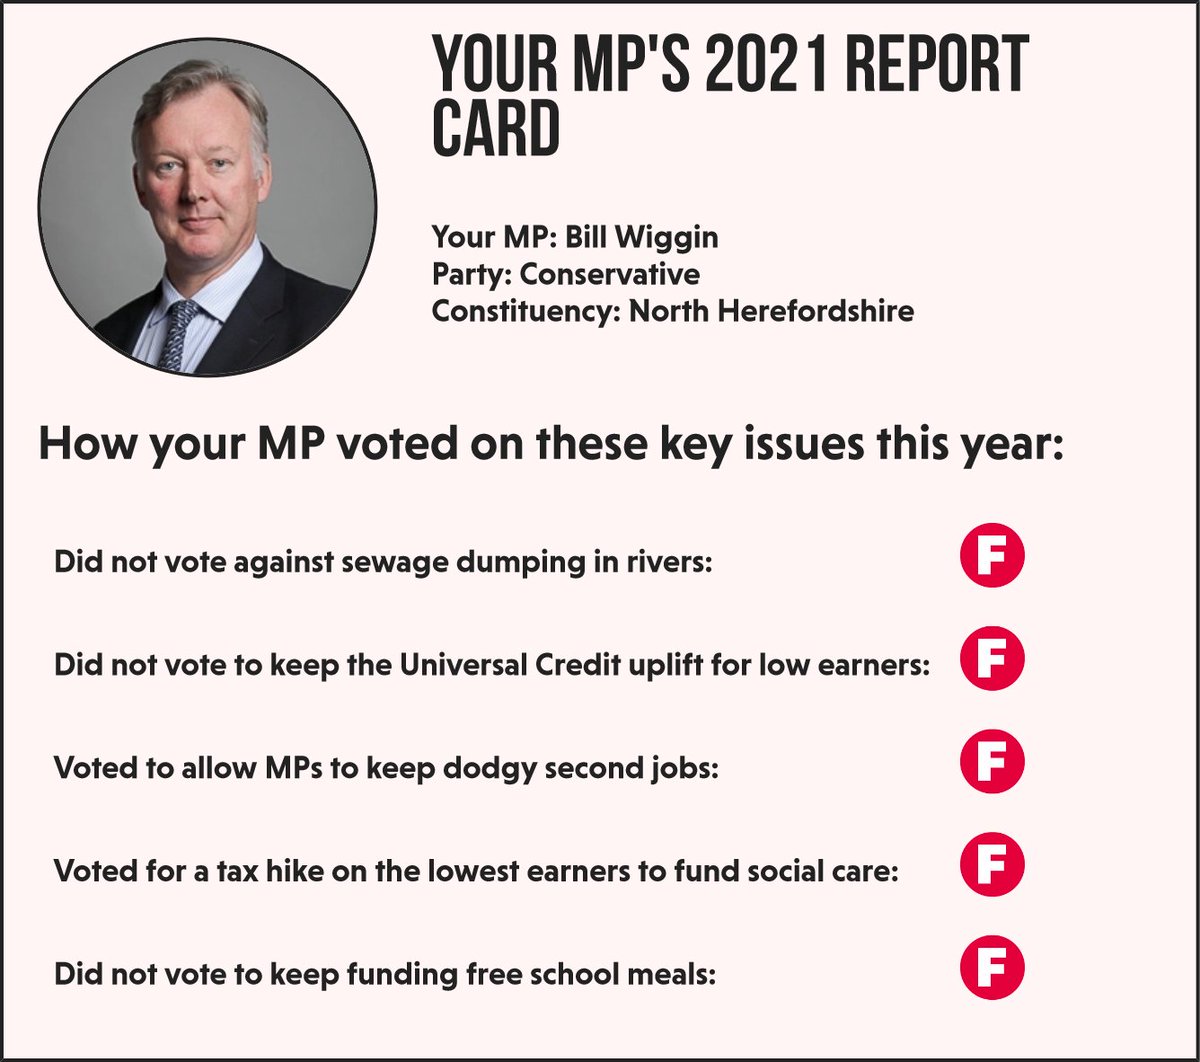 #BillWiggin #NorthHerefordshire
My MP's report card: